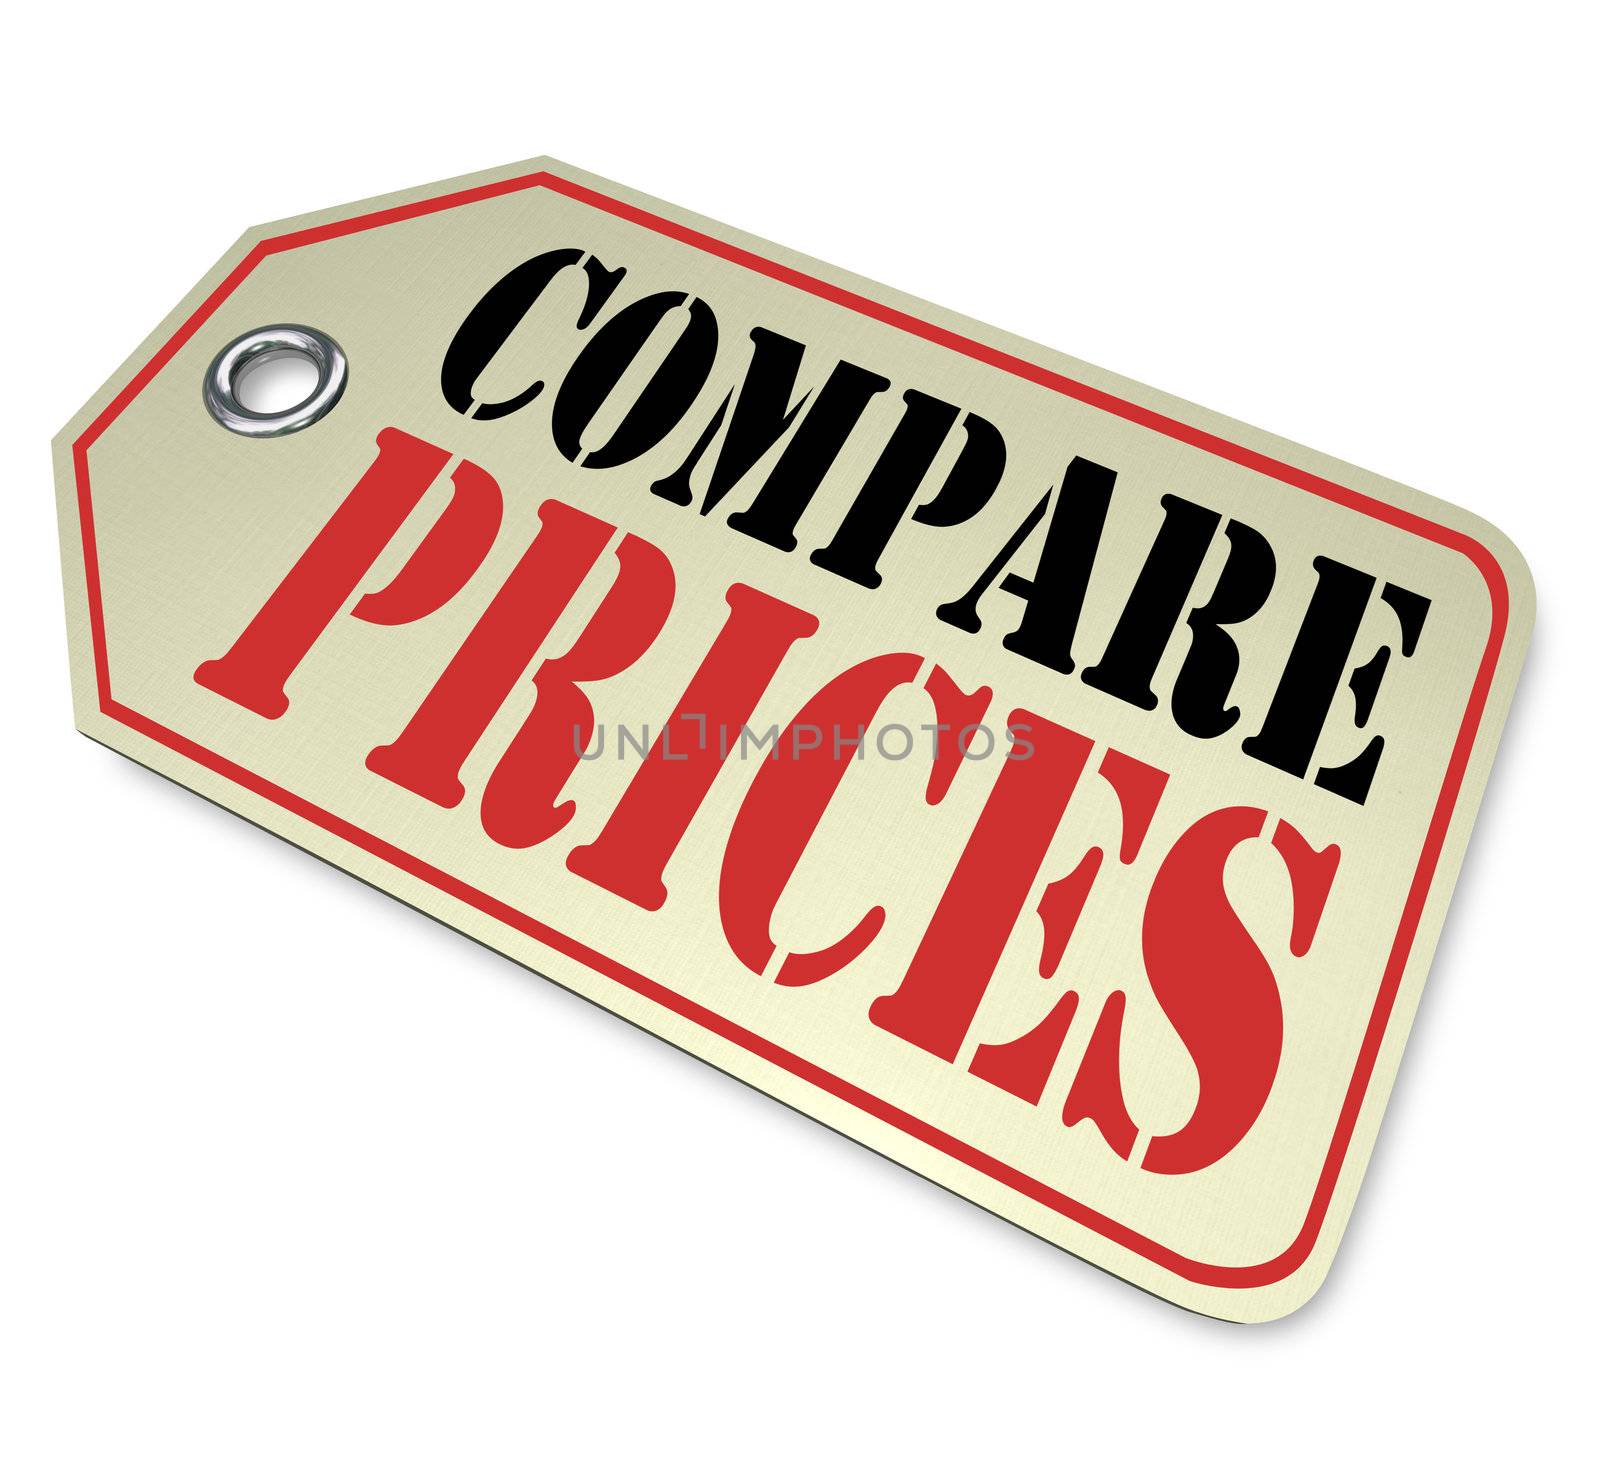 Compare Prices Tag Price Comparison Shopping by iQoncept